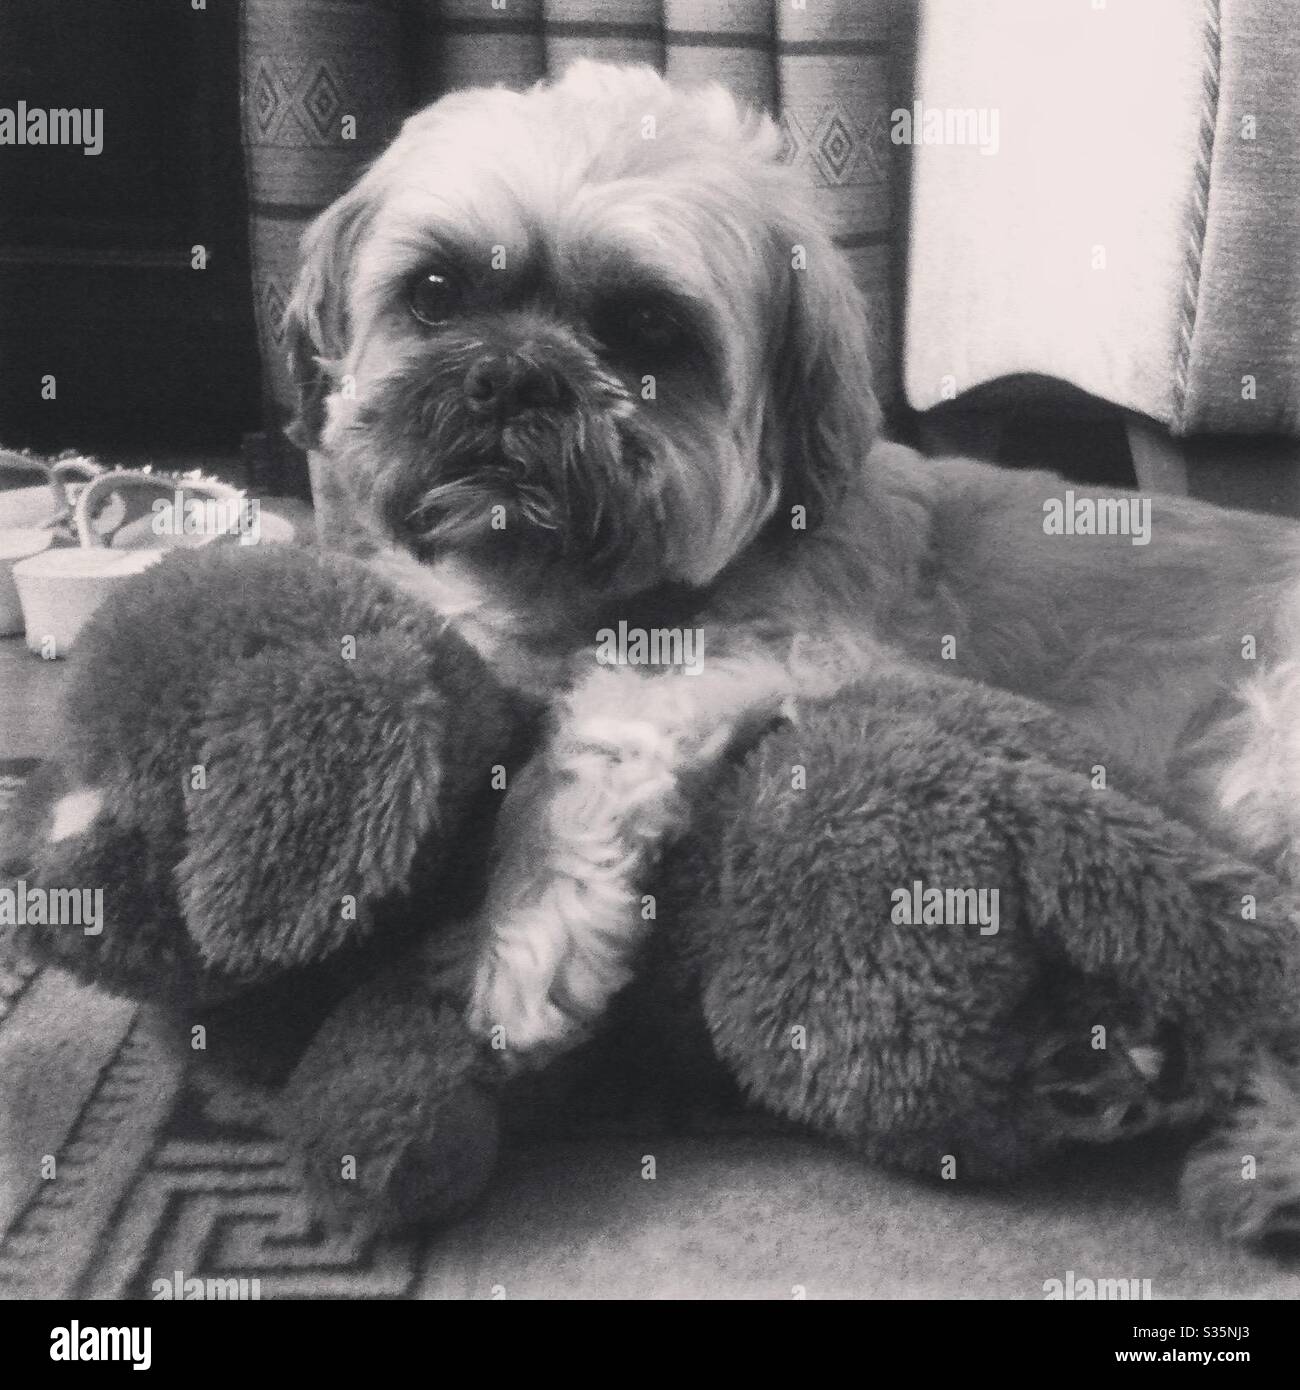 Dog with his teddy -Fotos und -Bildmaterial in hoher Auflösung – Alamy